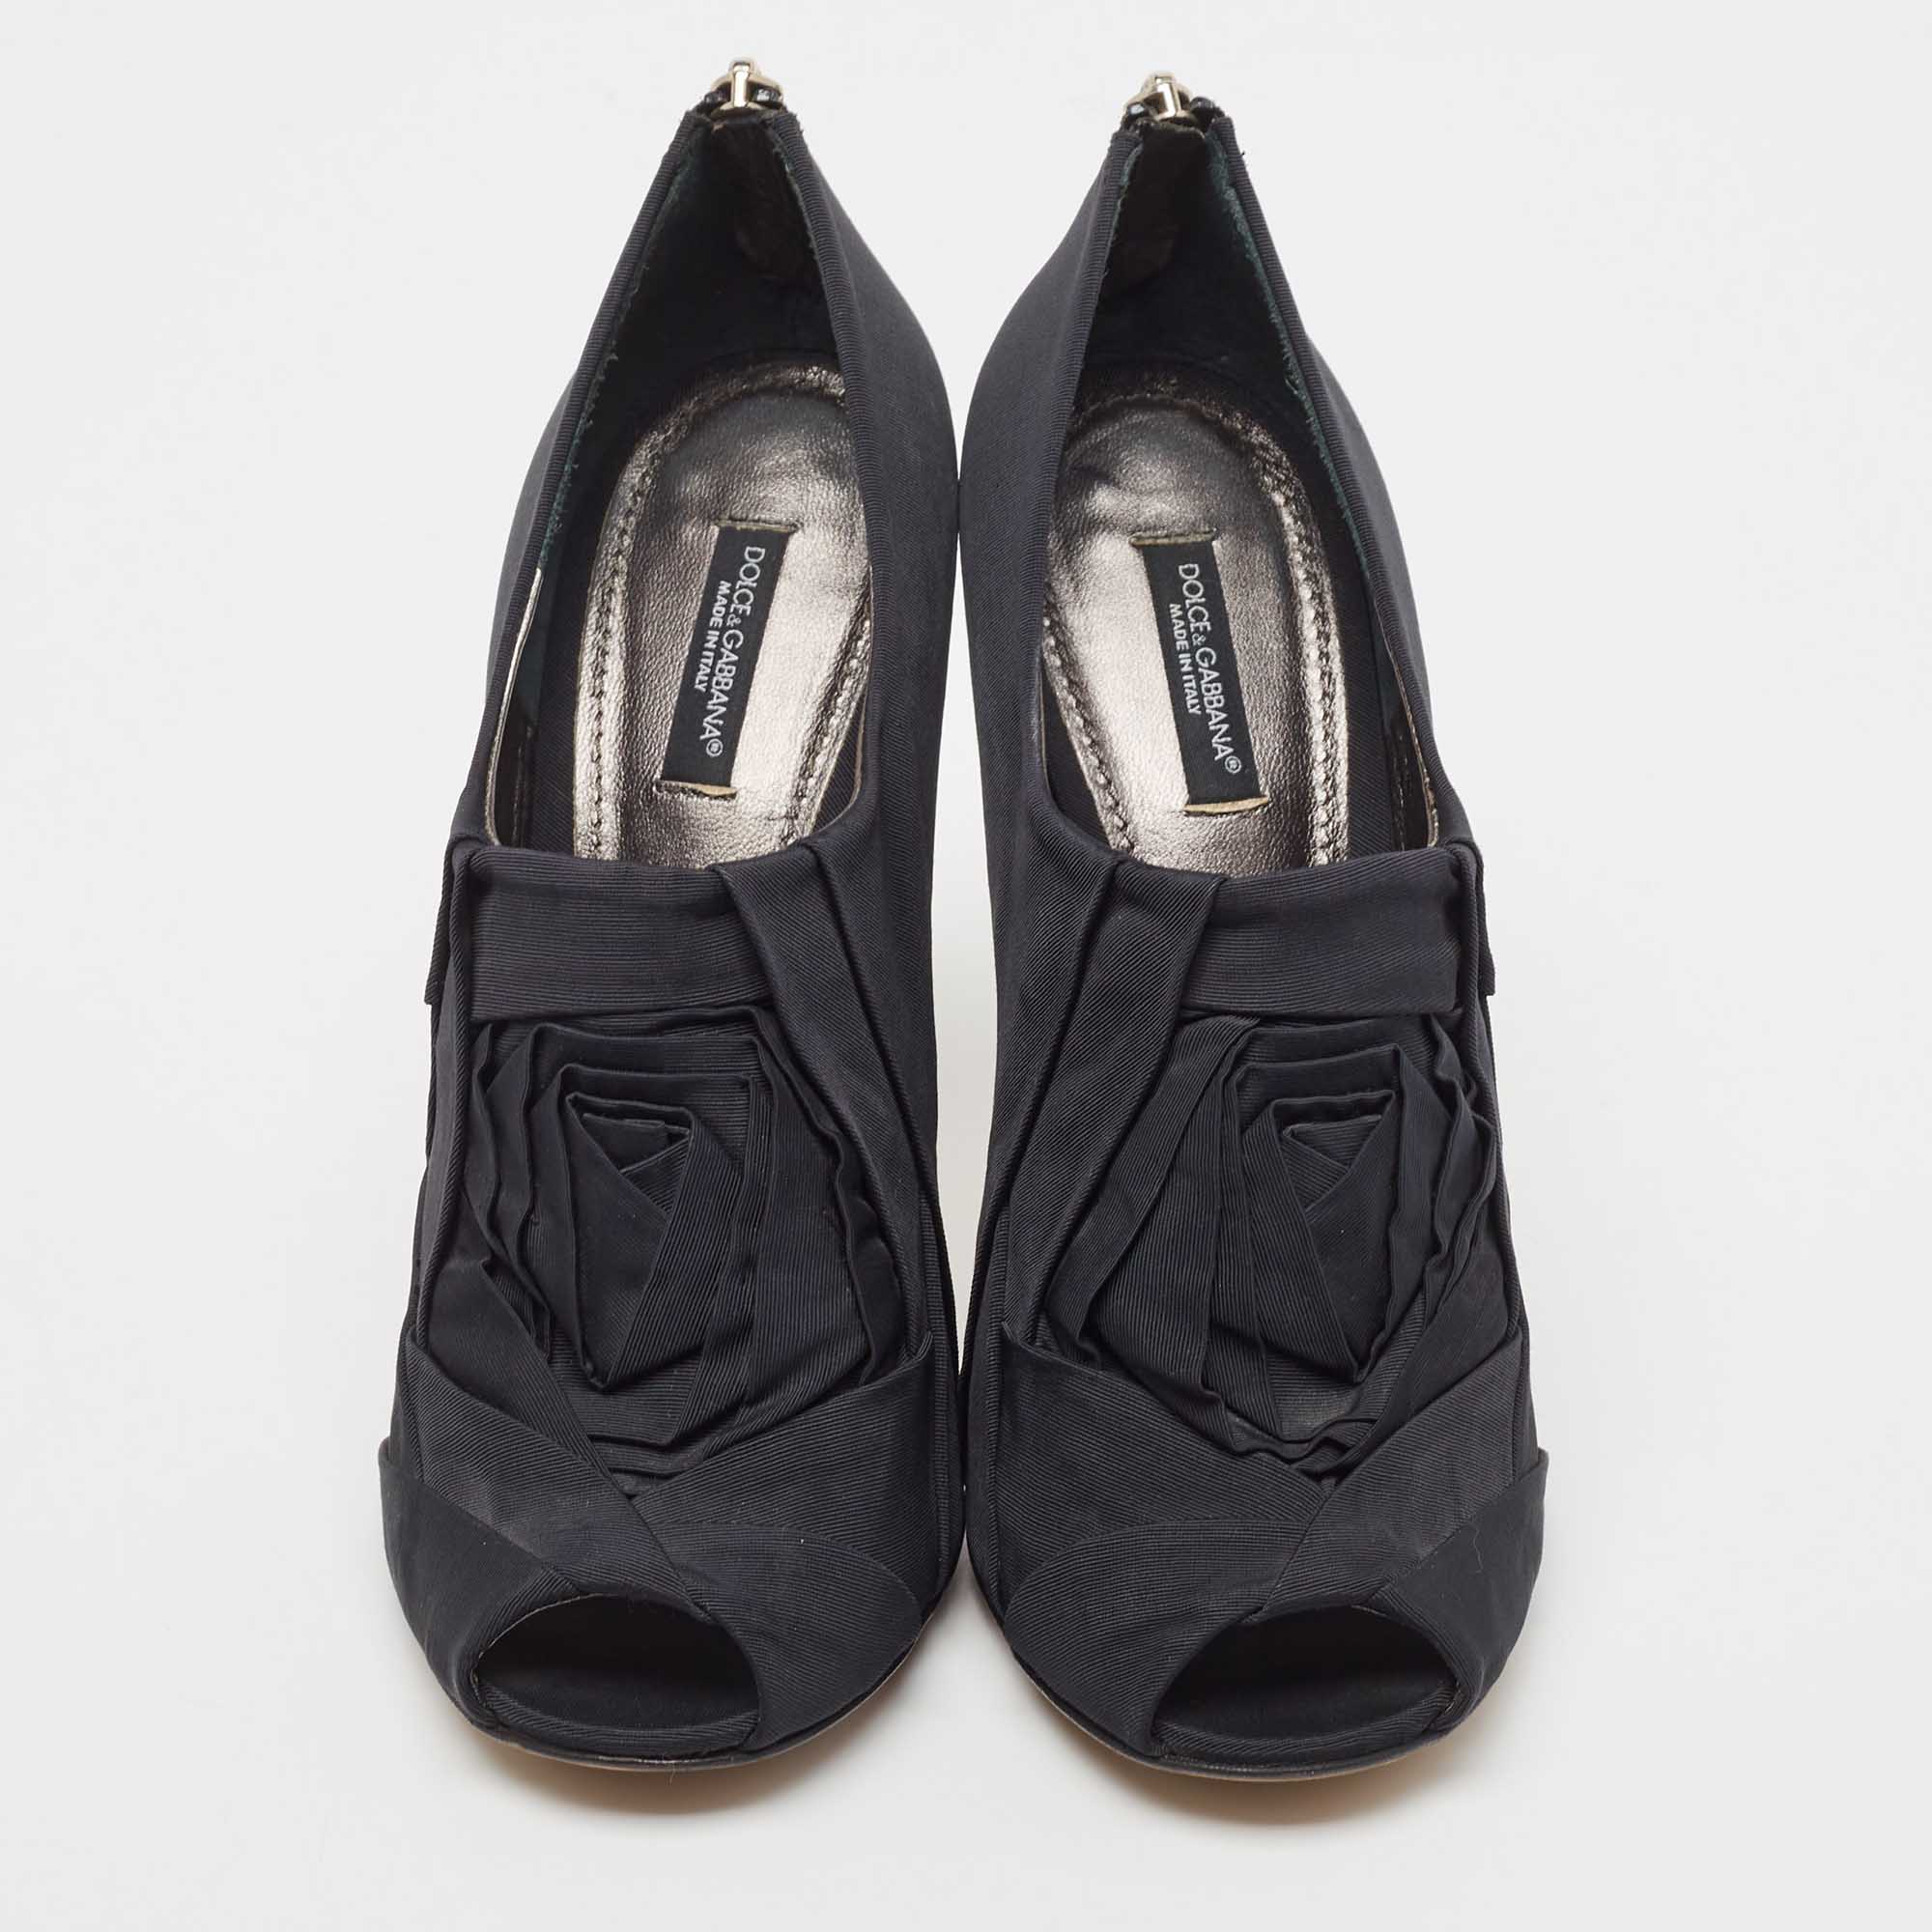 Dolce & Gabbana Black Grosgrain Peep Toe Booties Size 40